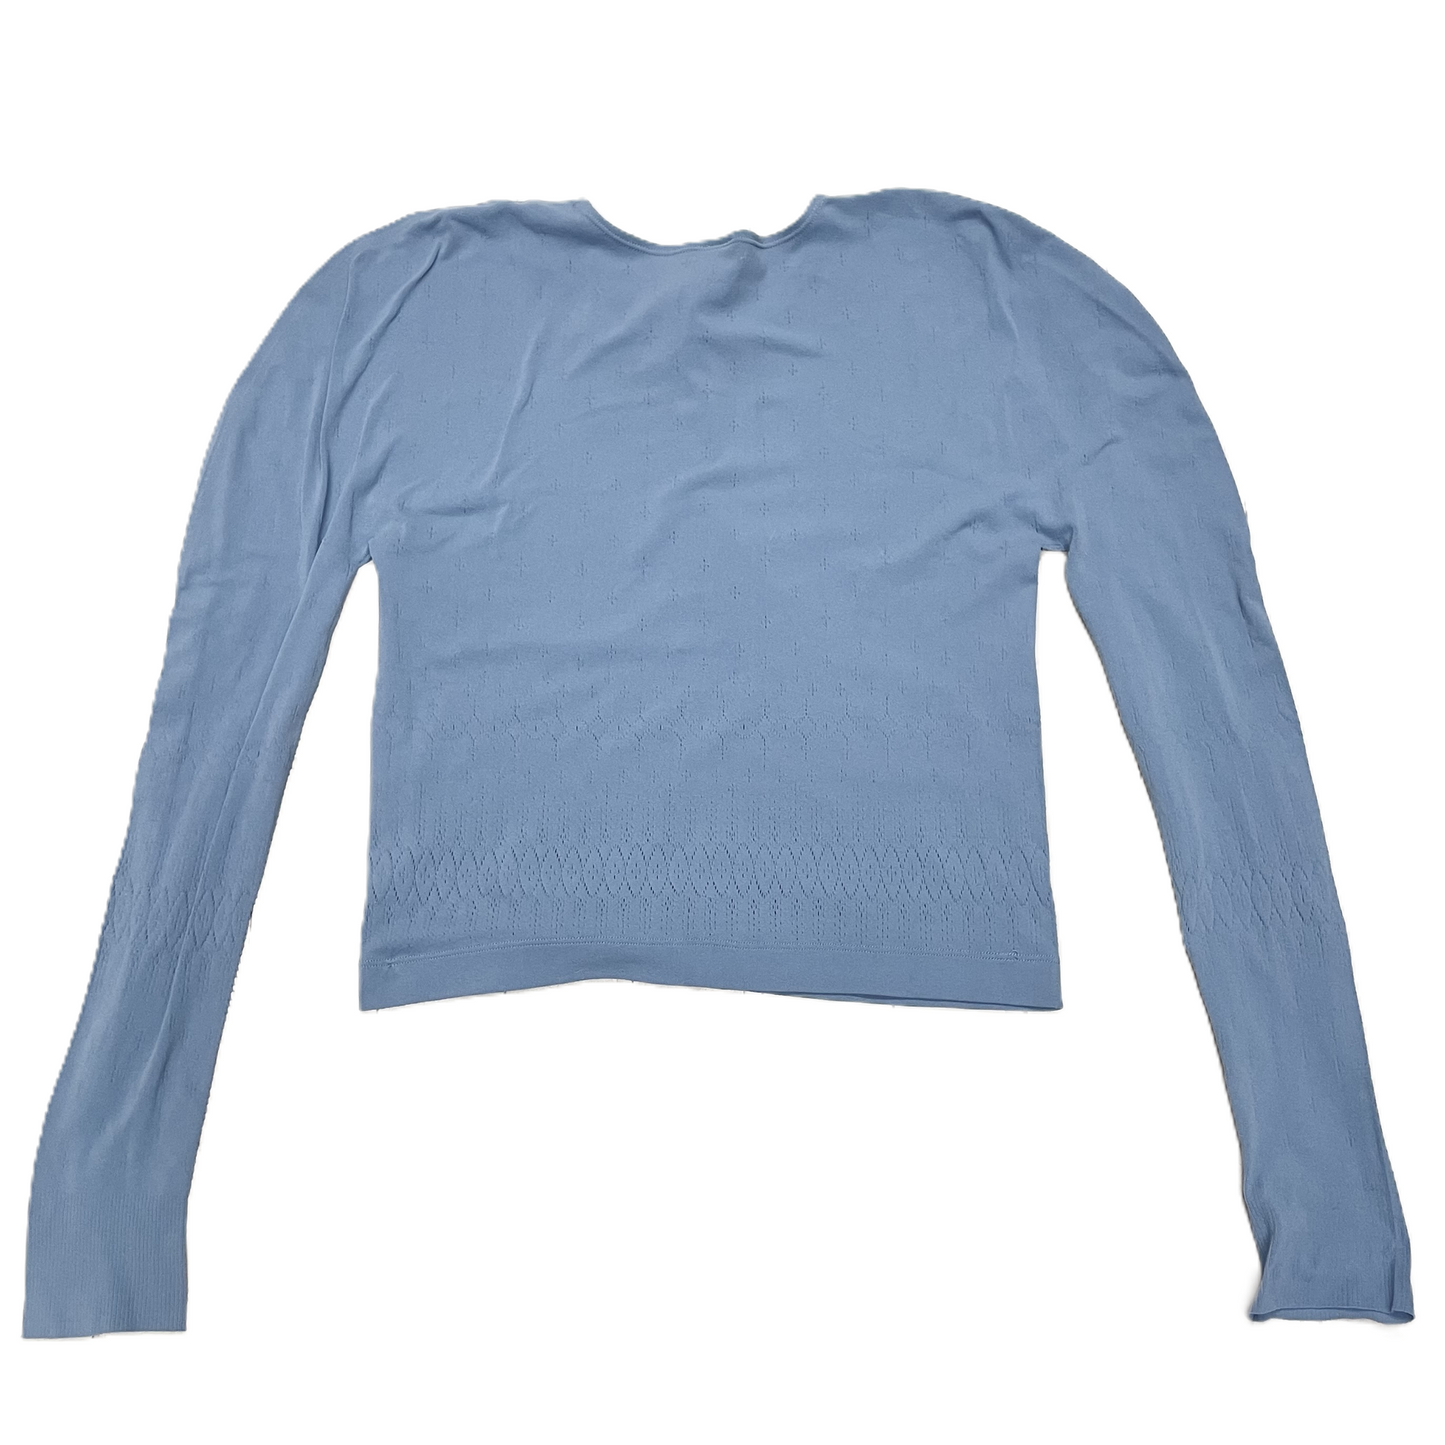 Blue Athletic Top Long Sleeve Crewneck By Fabrik, Size: L